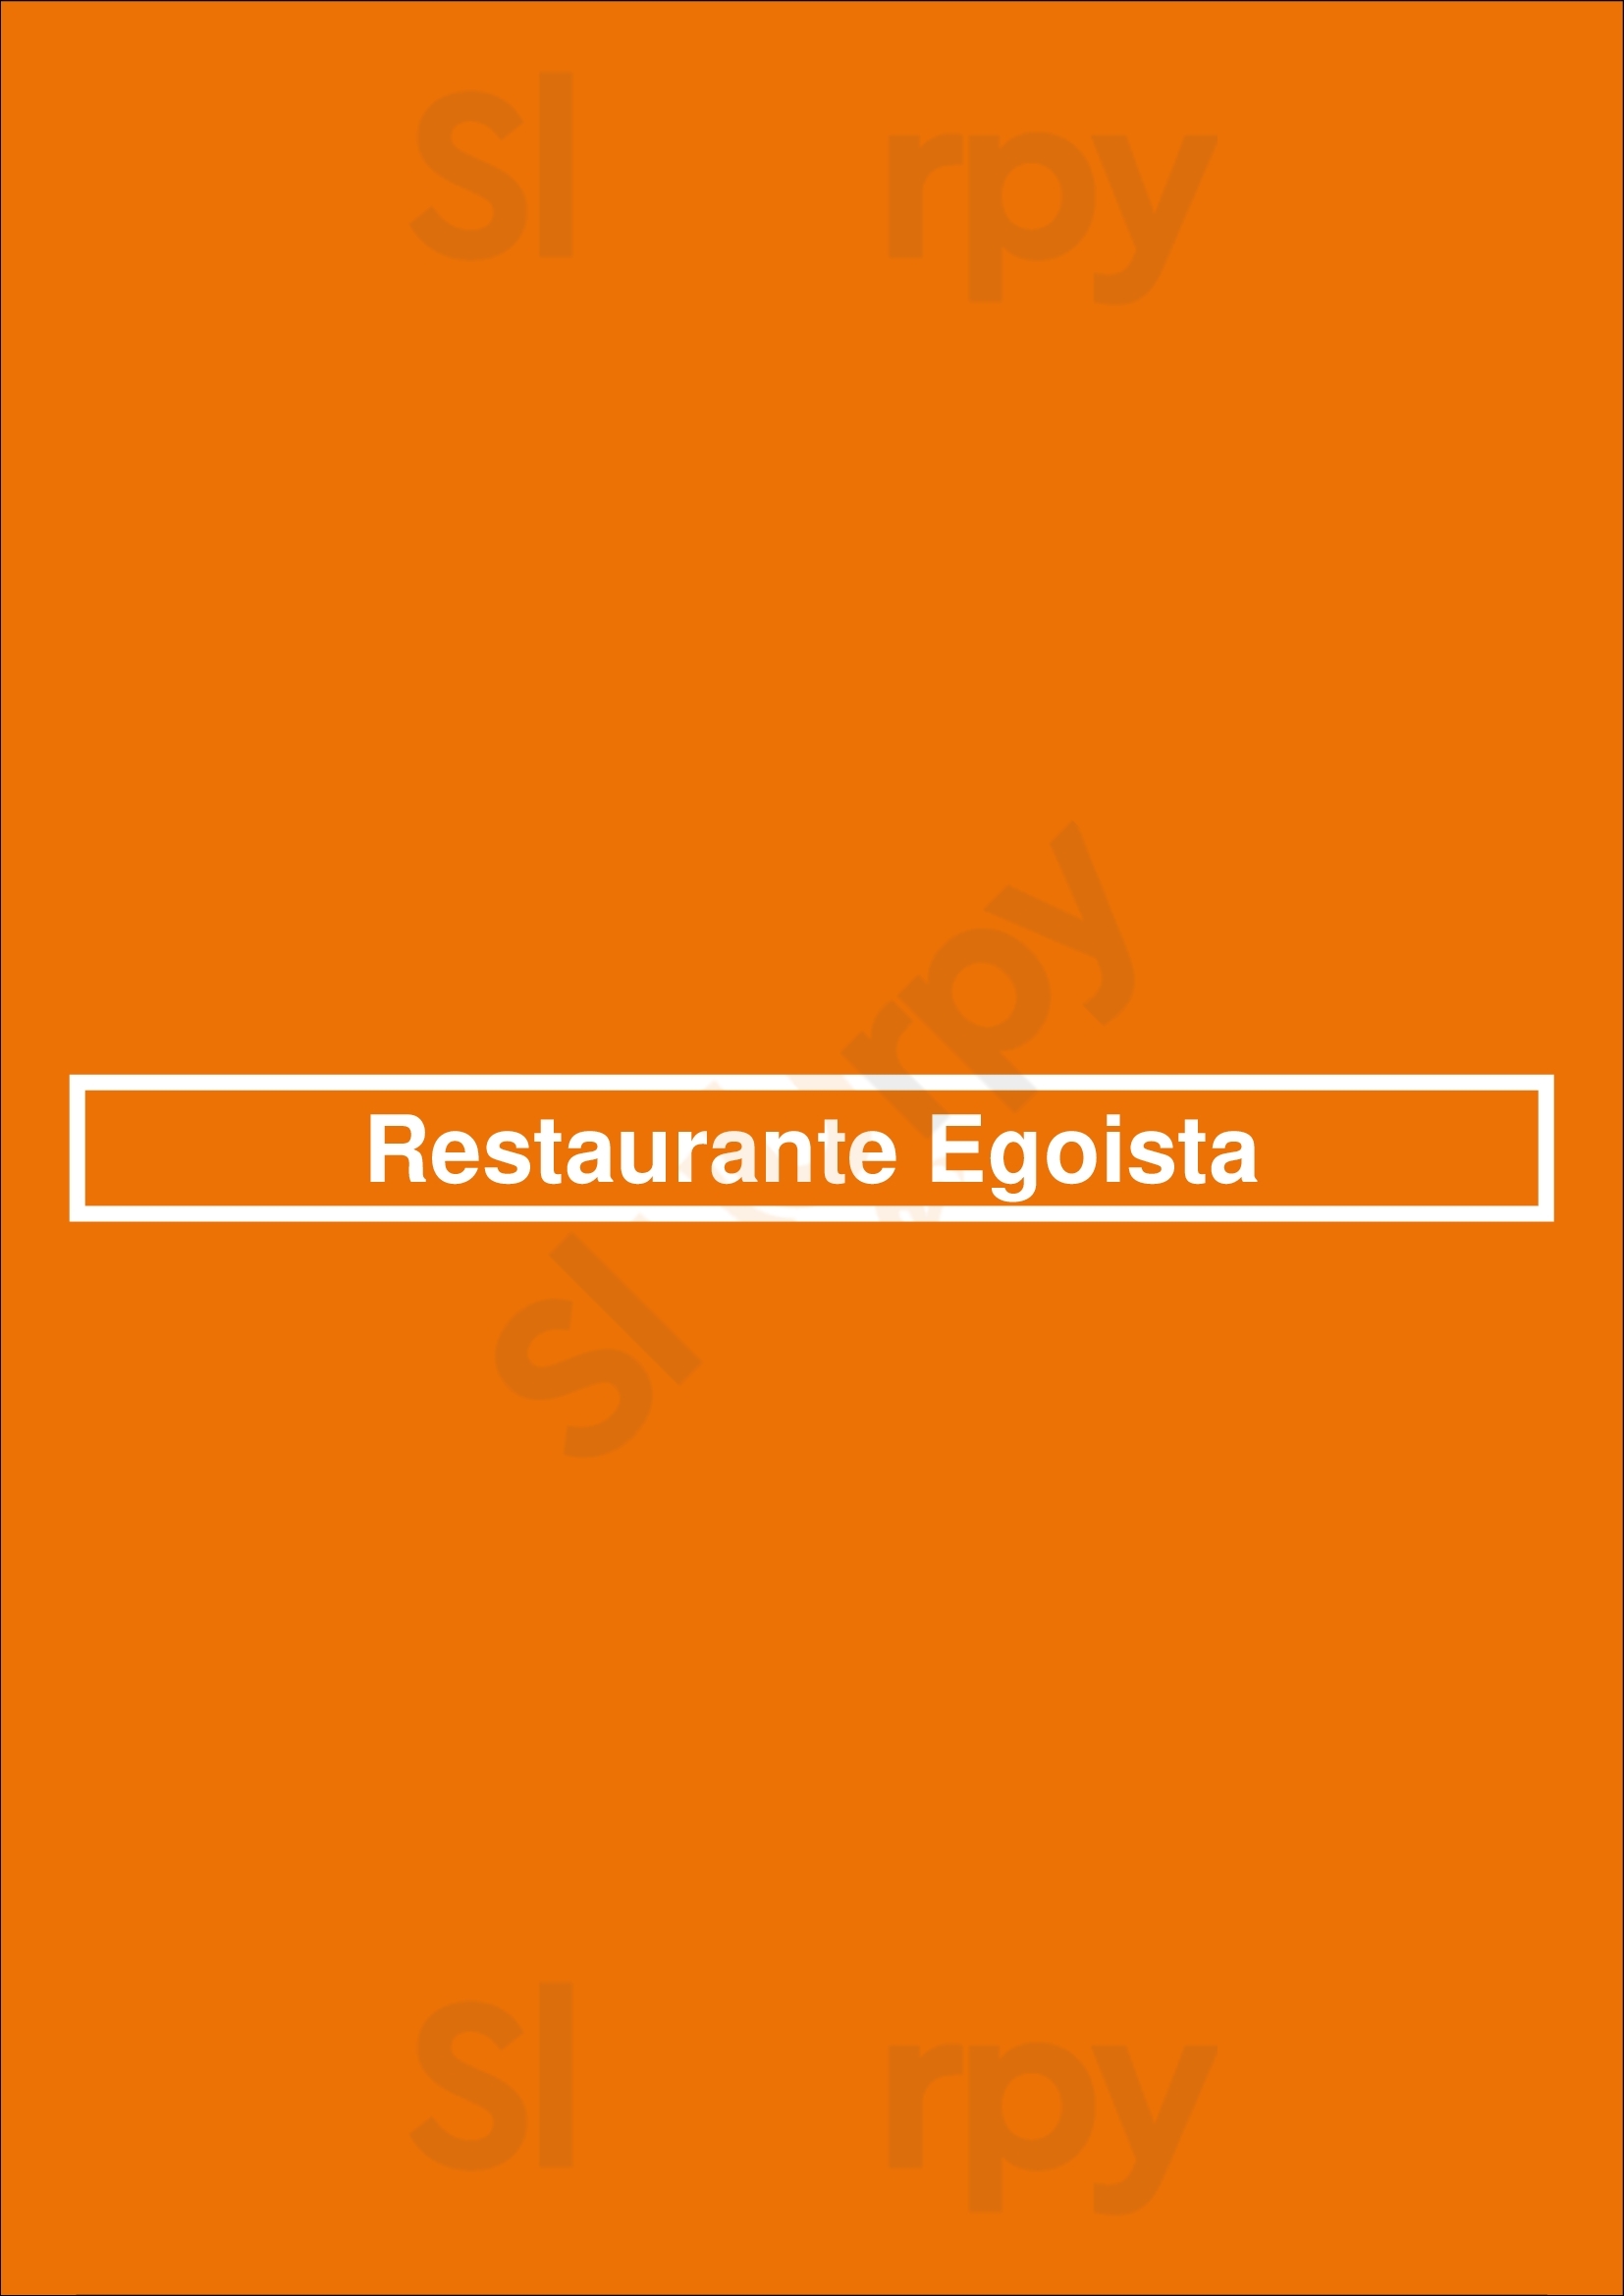 Restaurante Egoista Póvoa de Varzim Menu - 1